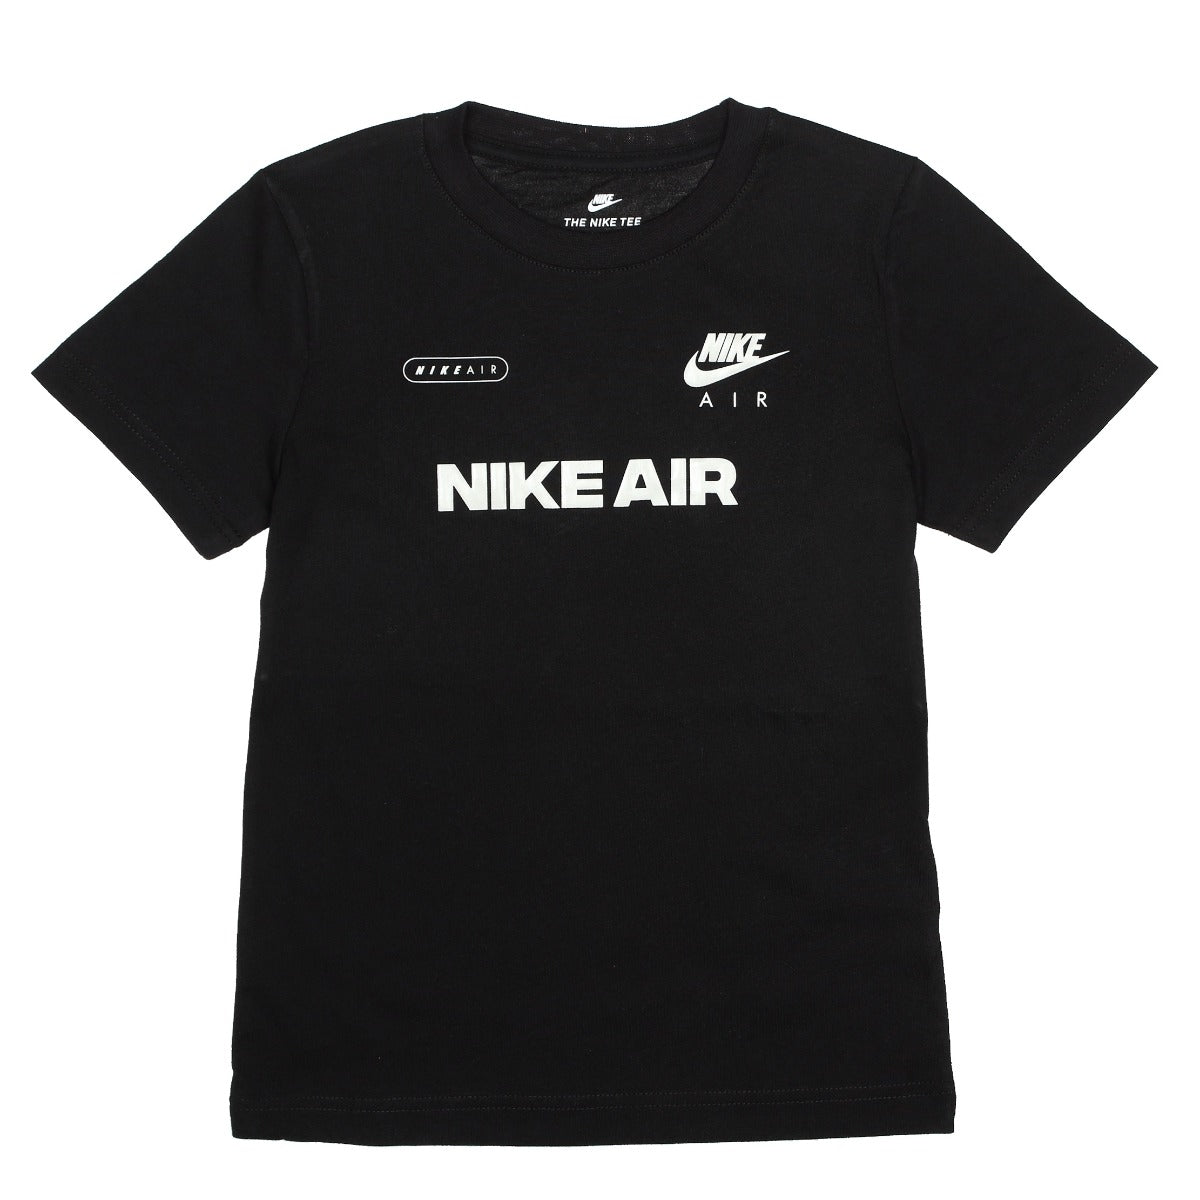 Maglietta Nike Air Bambini - nera/bianca